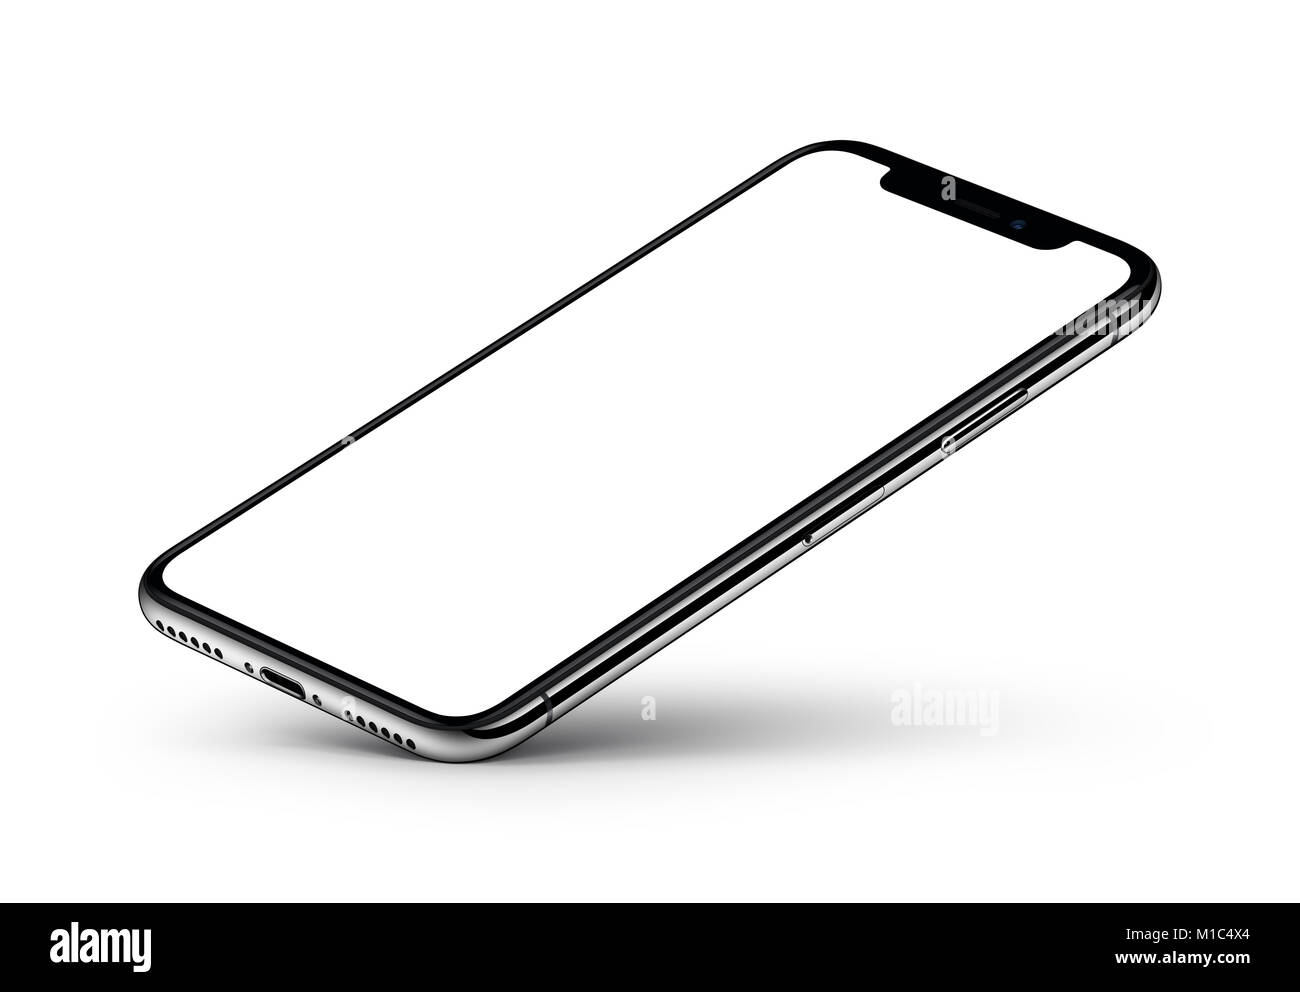 IPhone X. Perspektive smartphone Mockup mit leerer Bildschirm beruht auf einer Ecke. Stockfoto